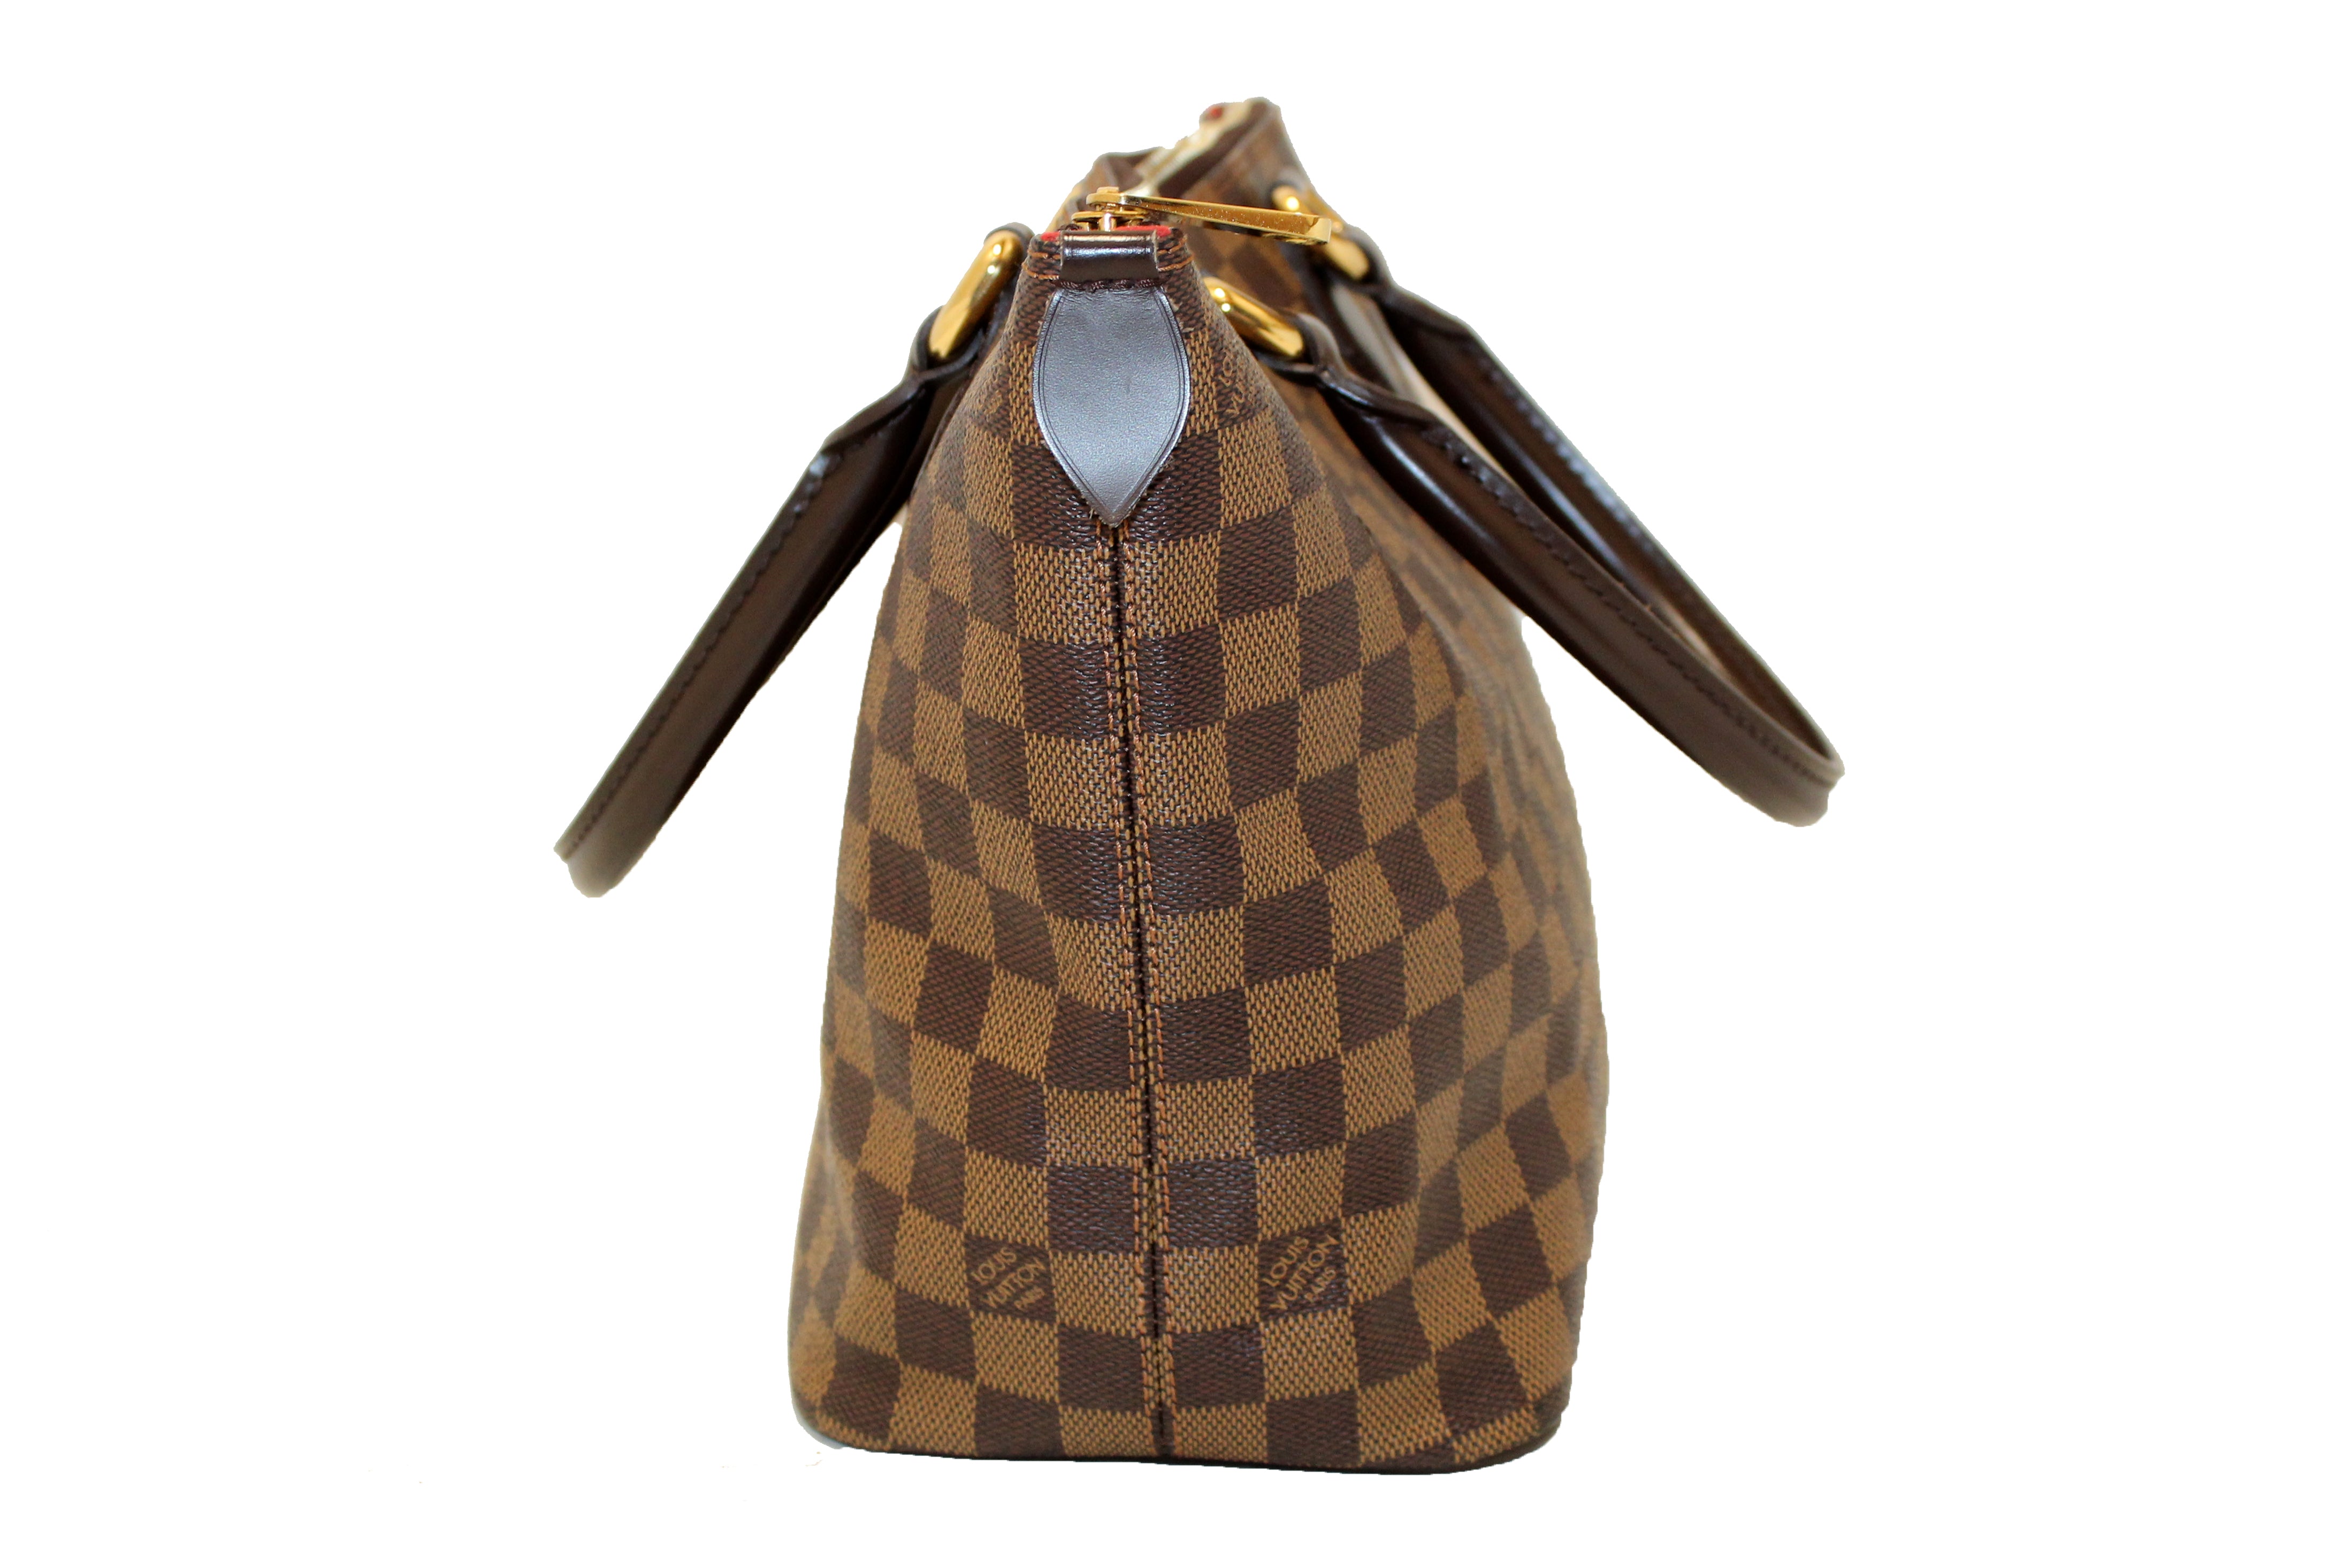 Authentic Louis Vuitton Damier Ebene Saleya PM Handbag